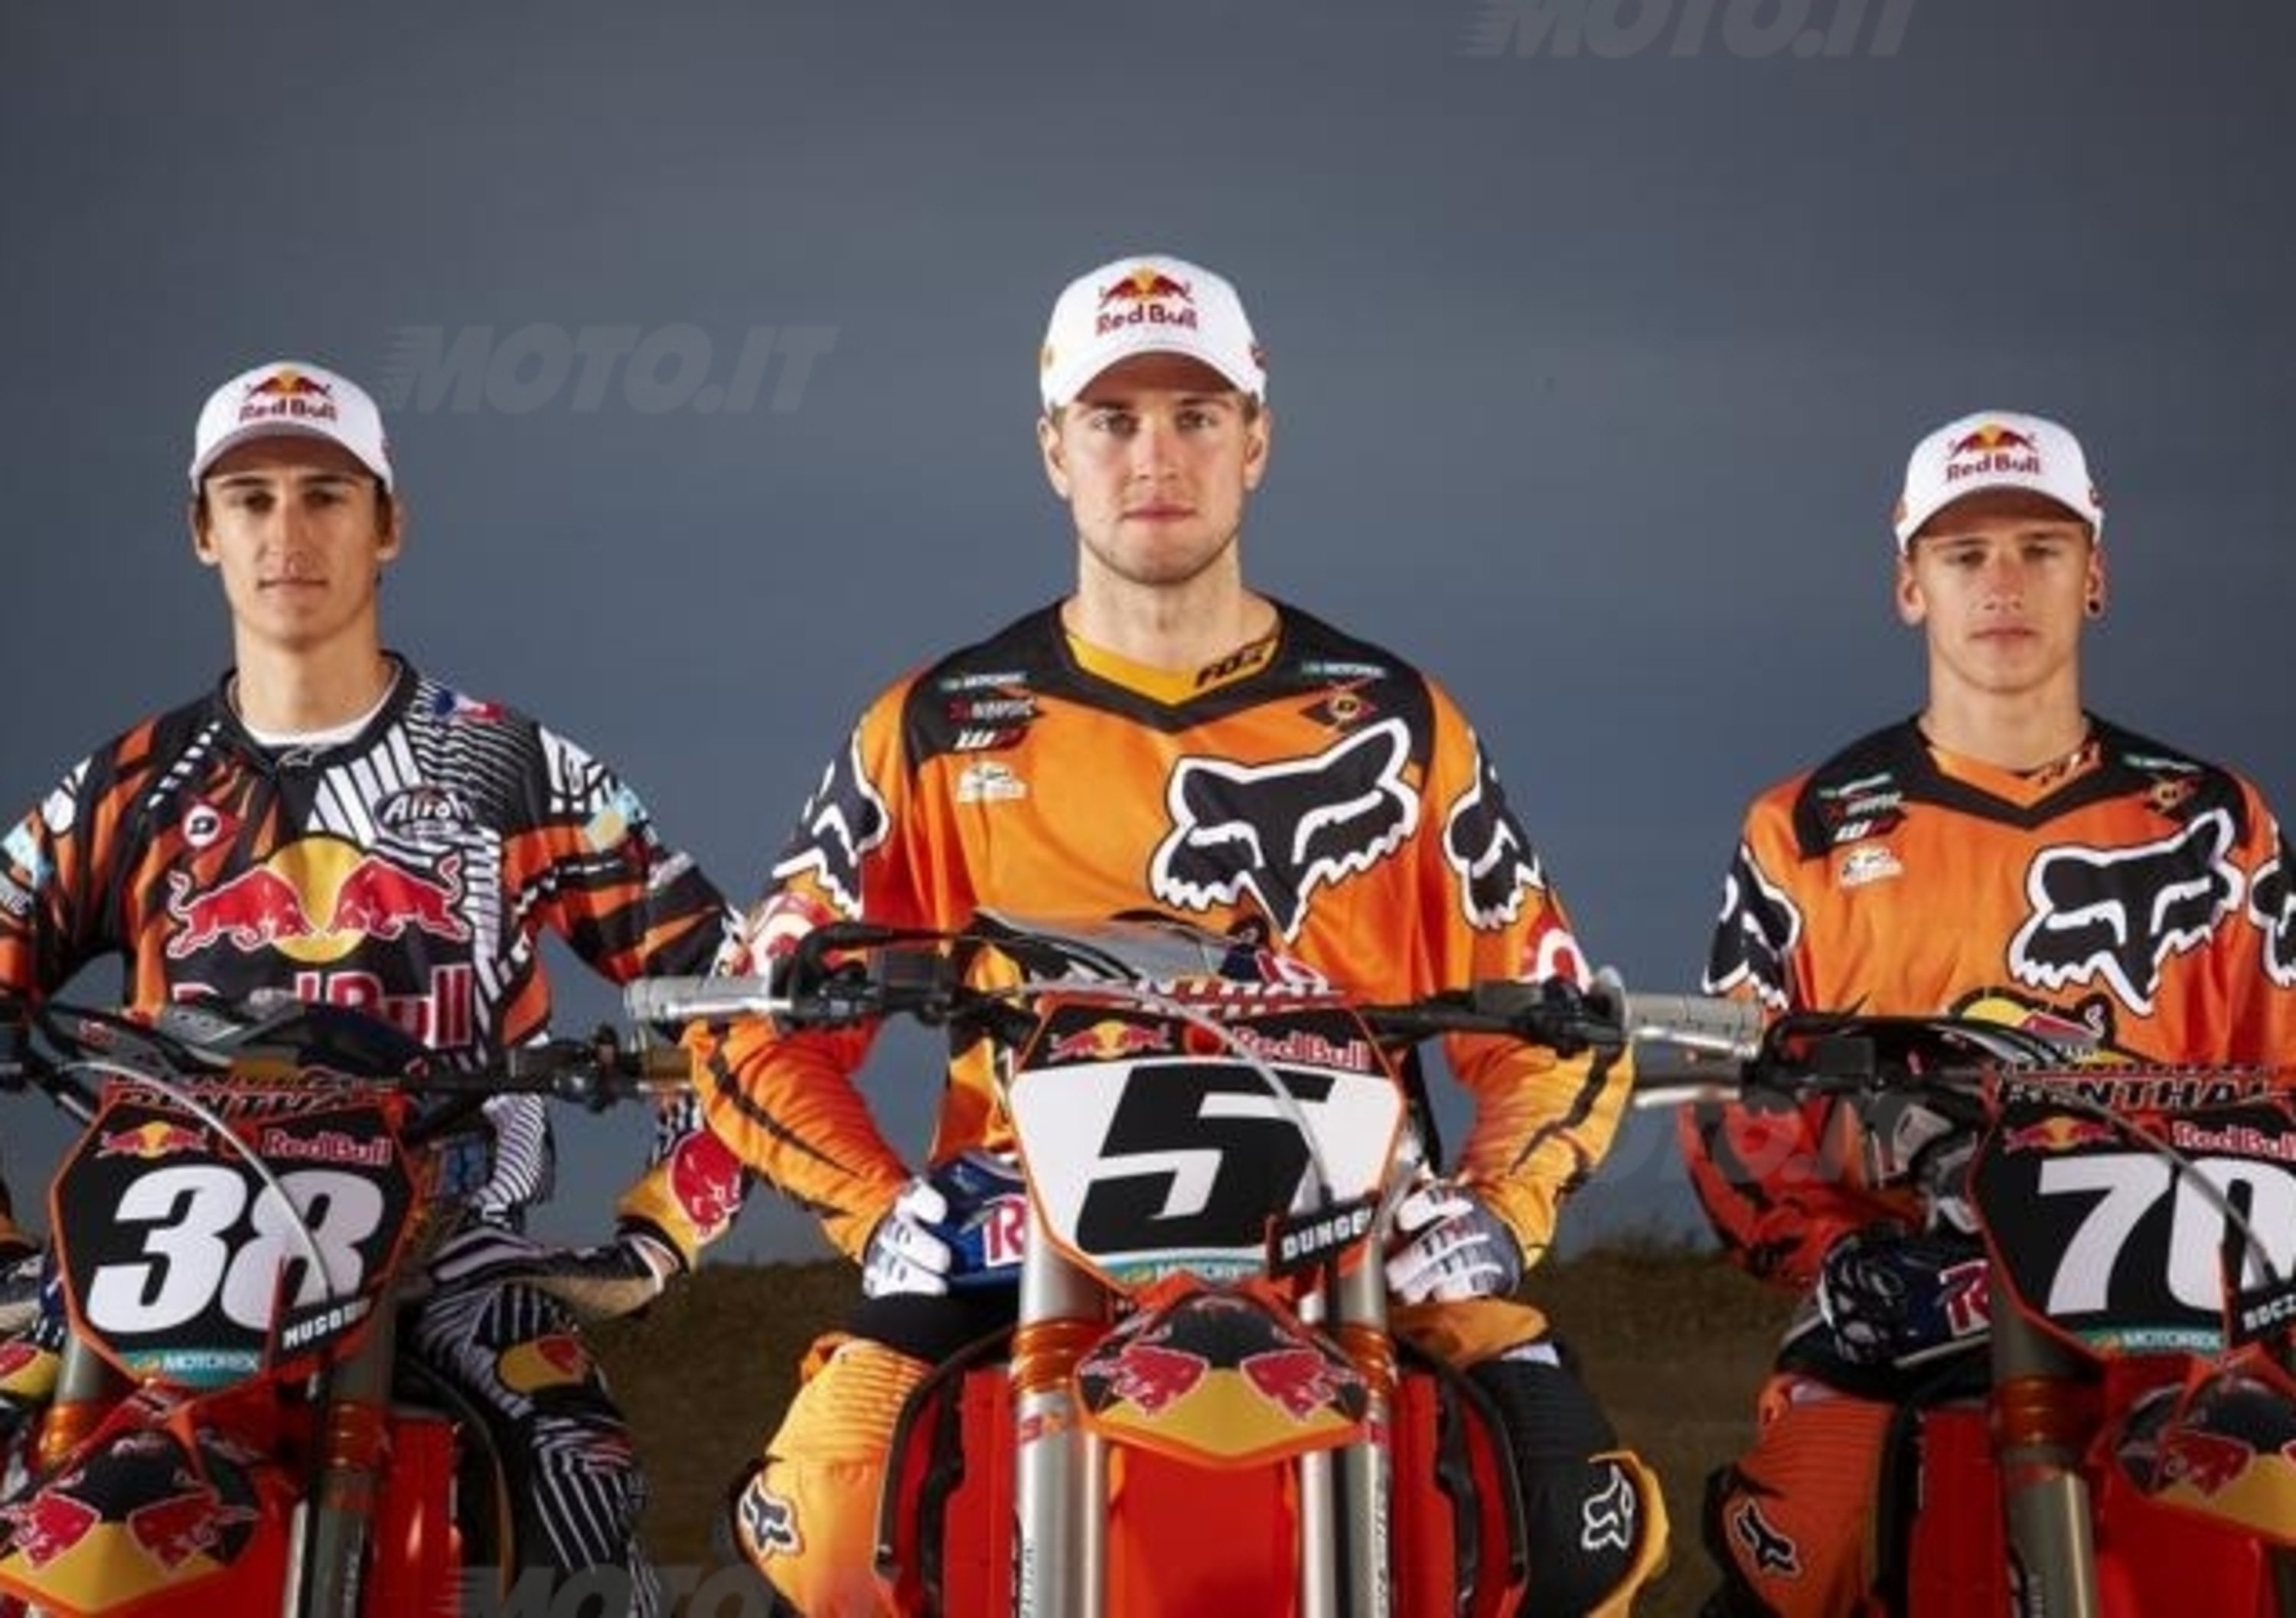 KTM Red Bull Factory Team: le foto del team SX USA!